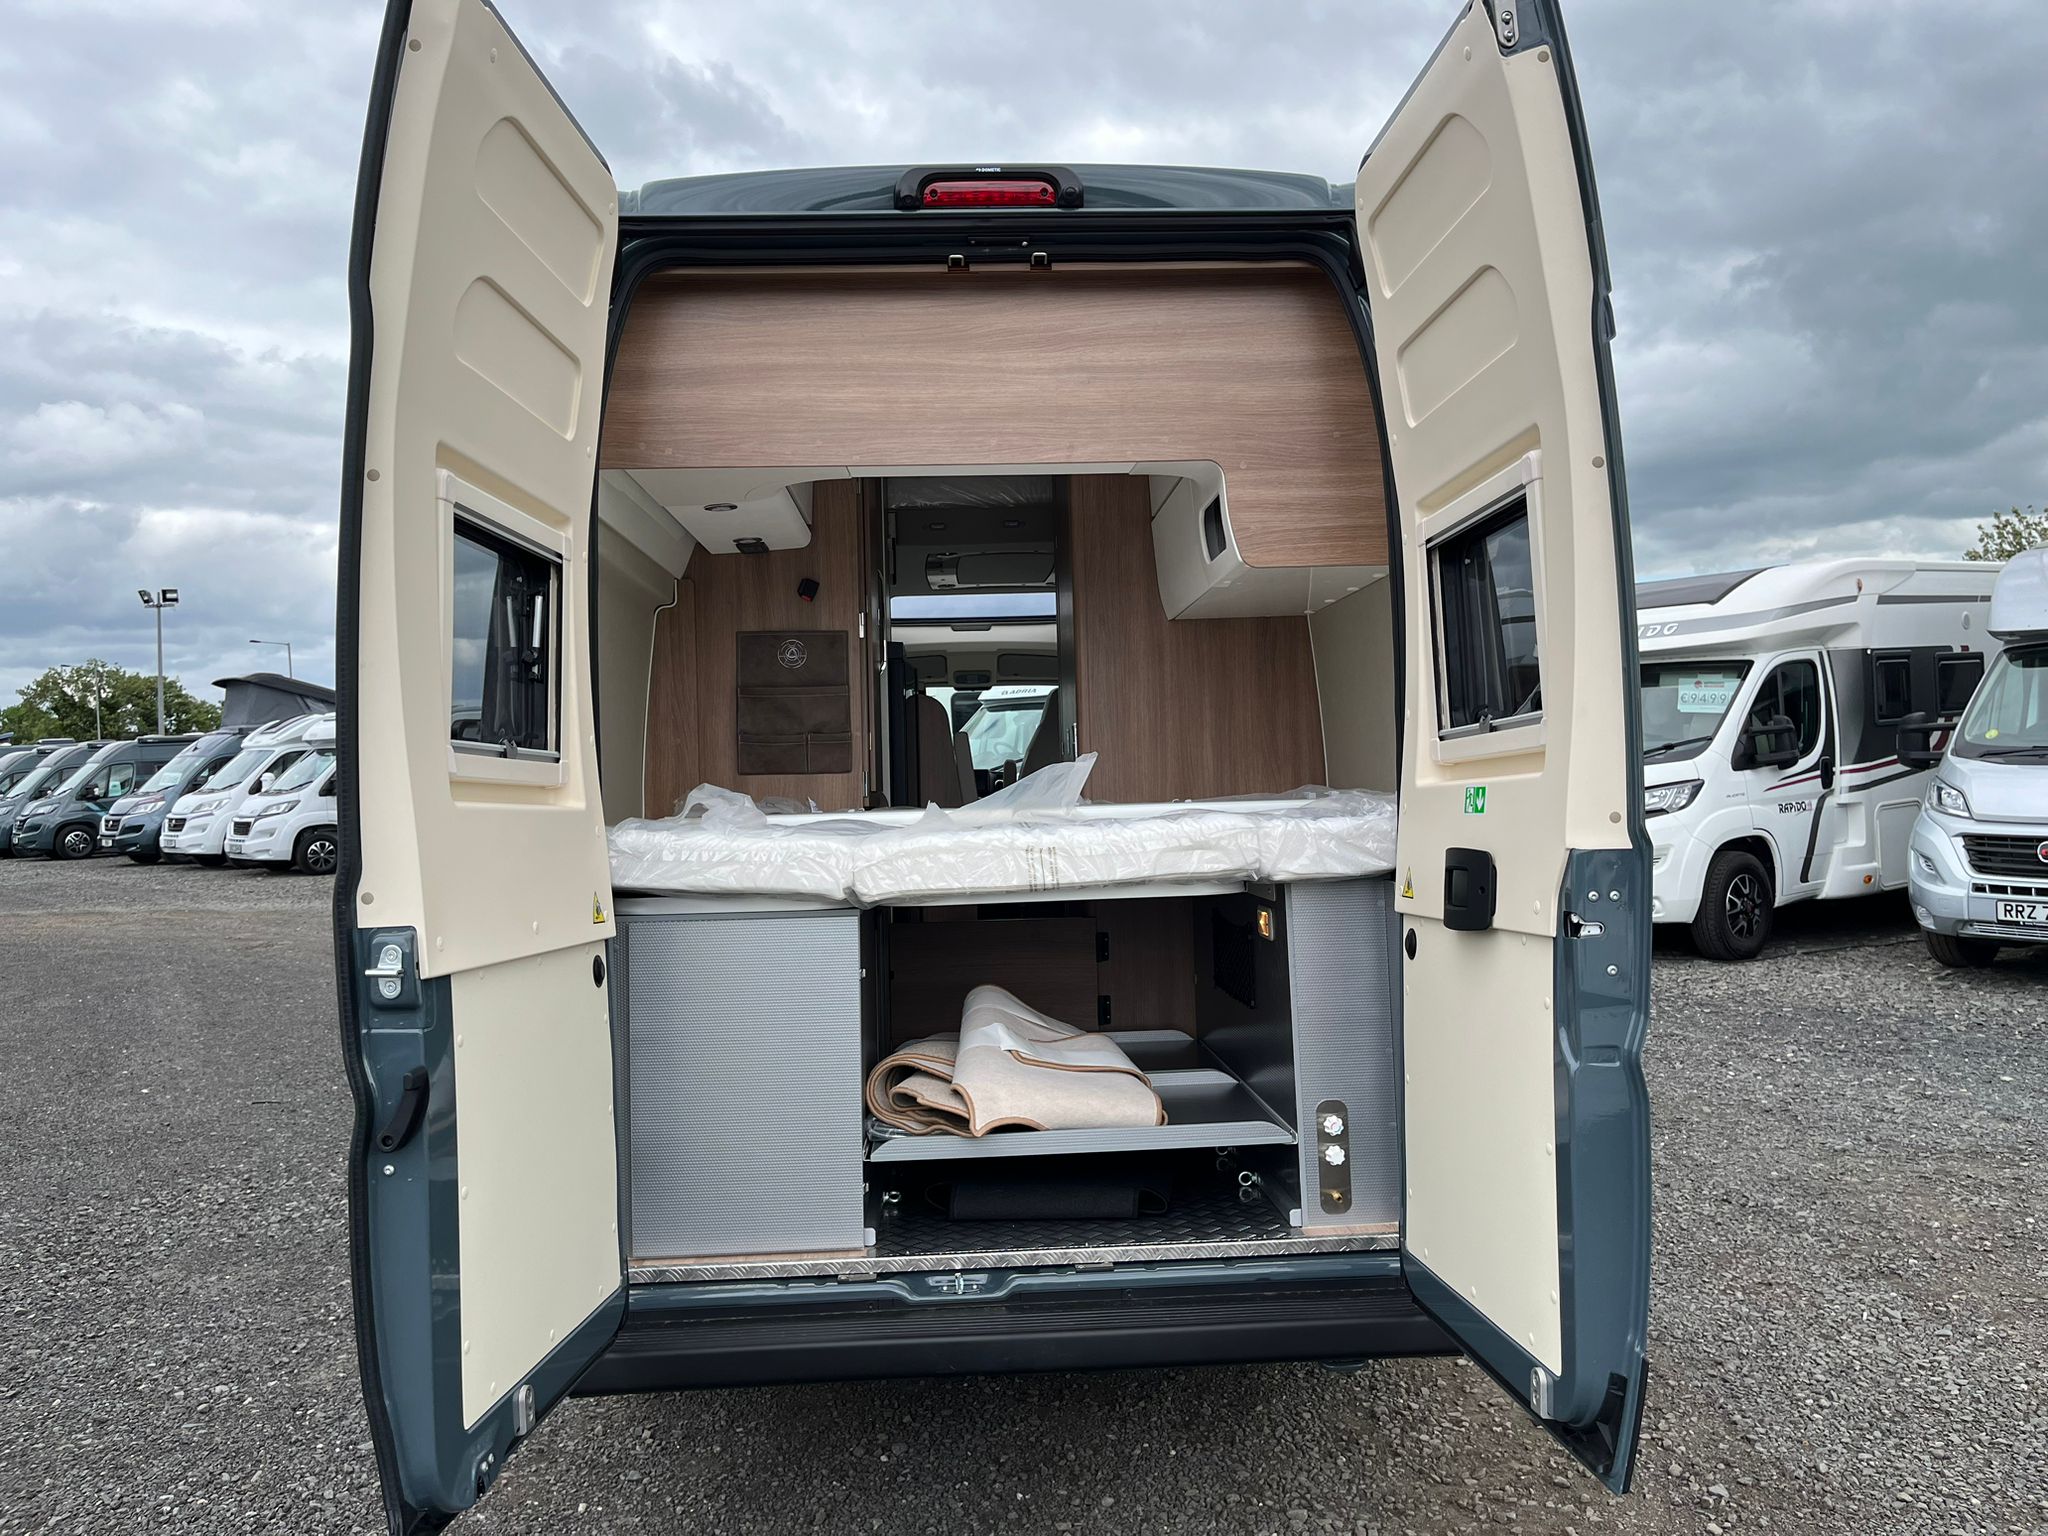 Dreamer Camper Van XL Limited Select